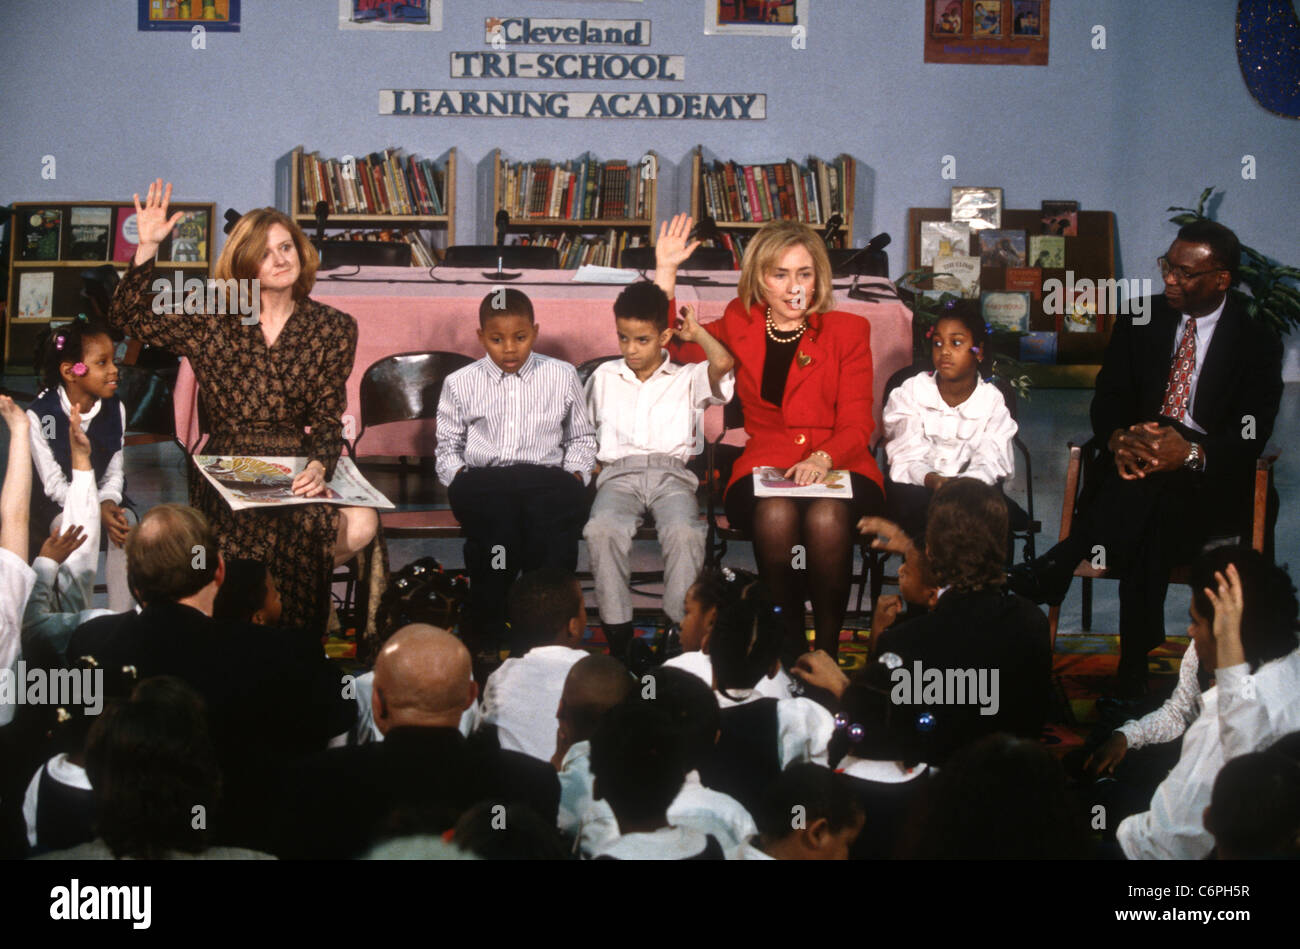 hillary-clinton-first-lady-reads-children-kids-reading-school-cleveland-C6PH5R.jpg